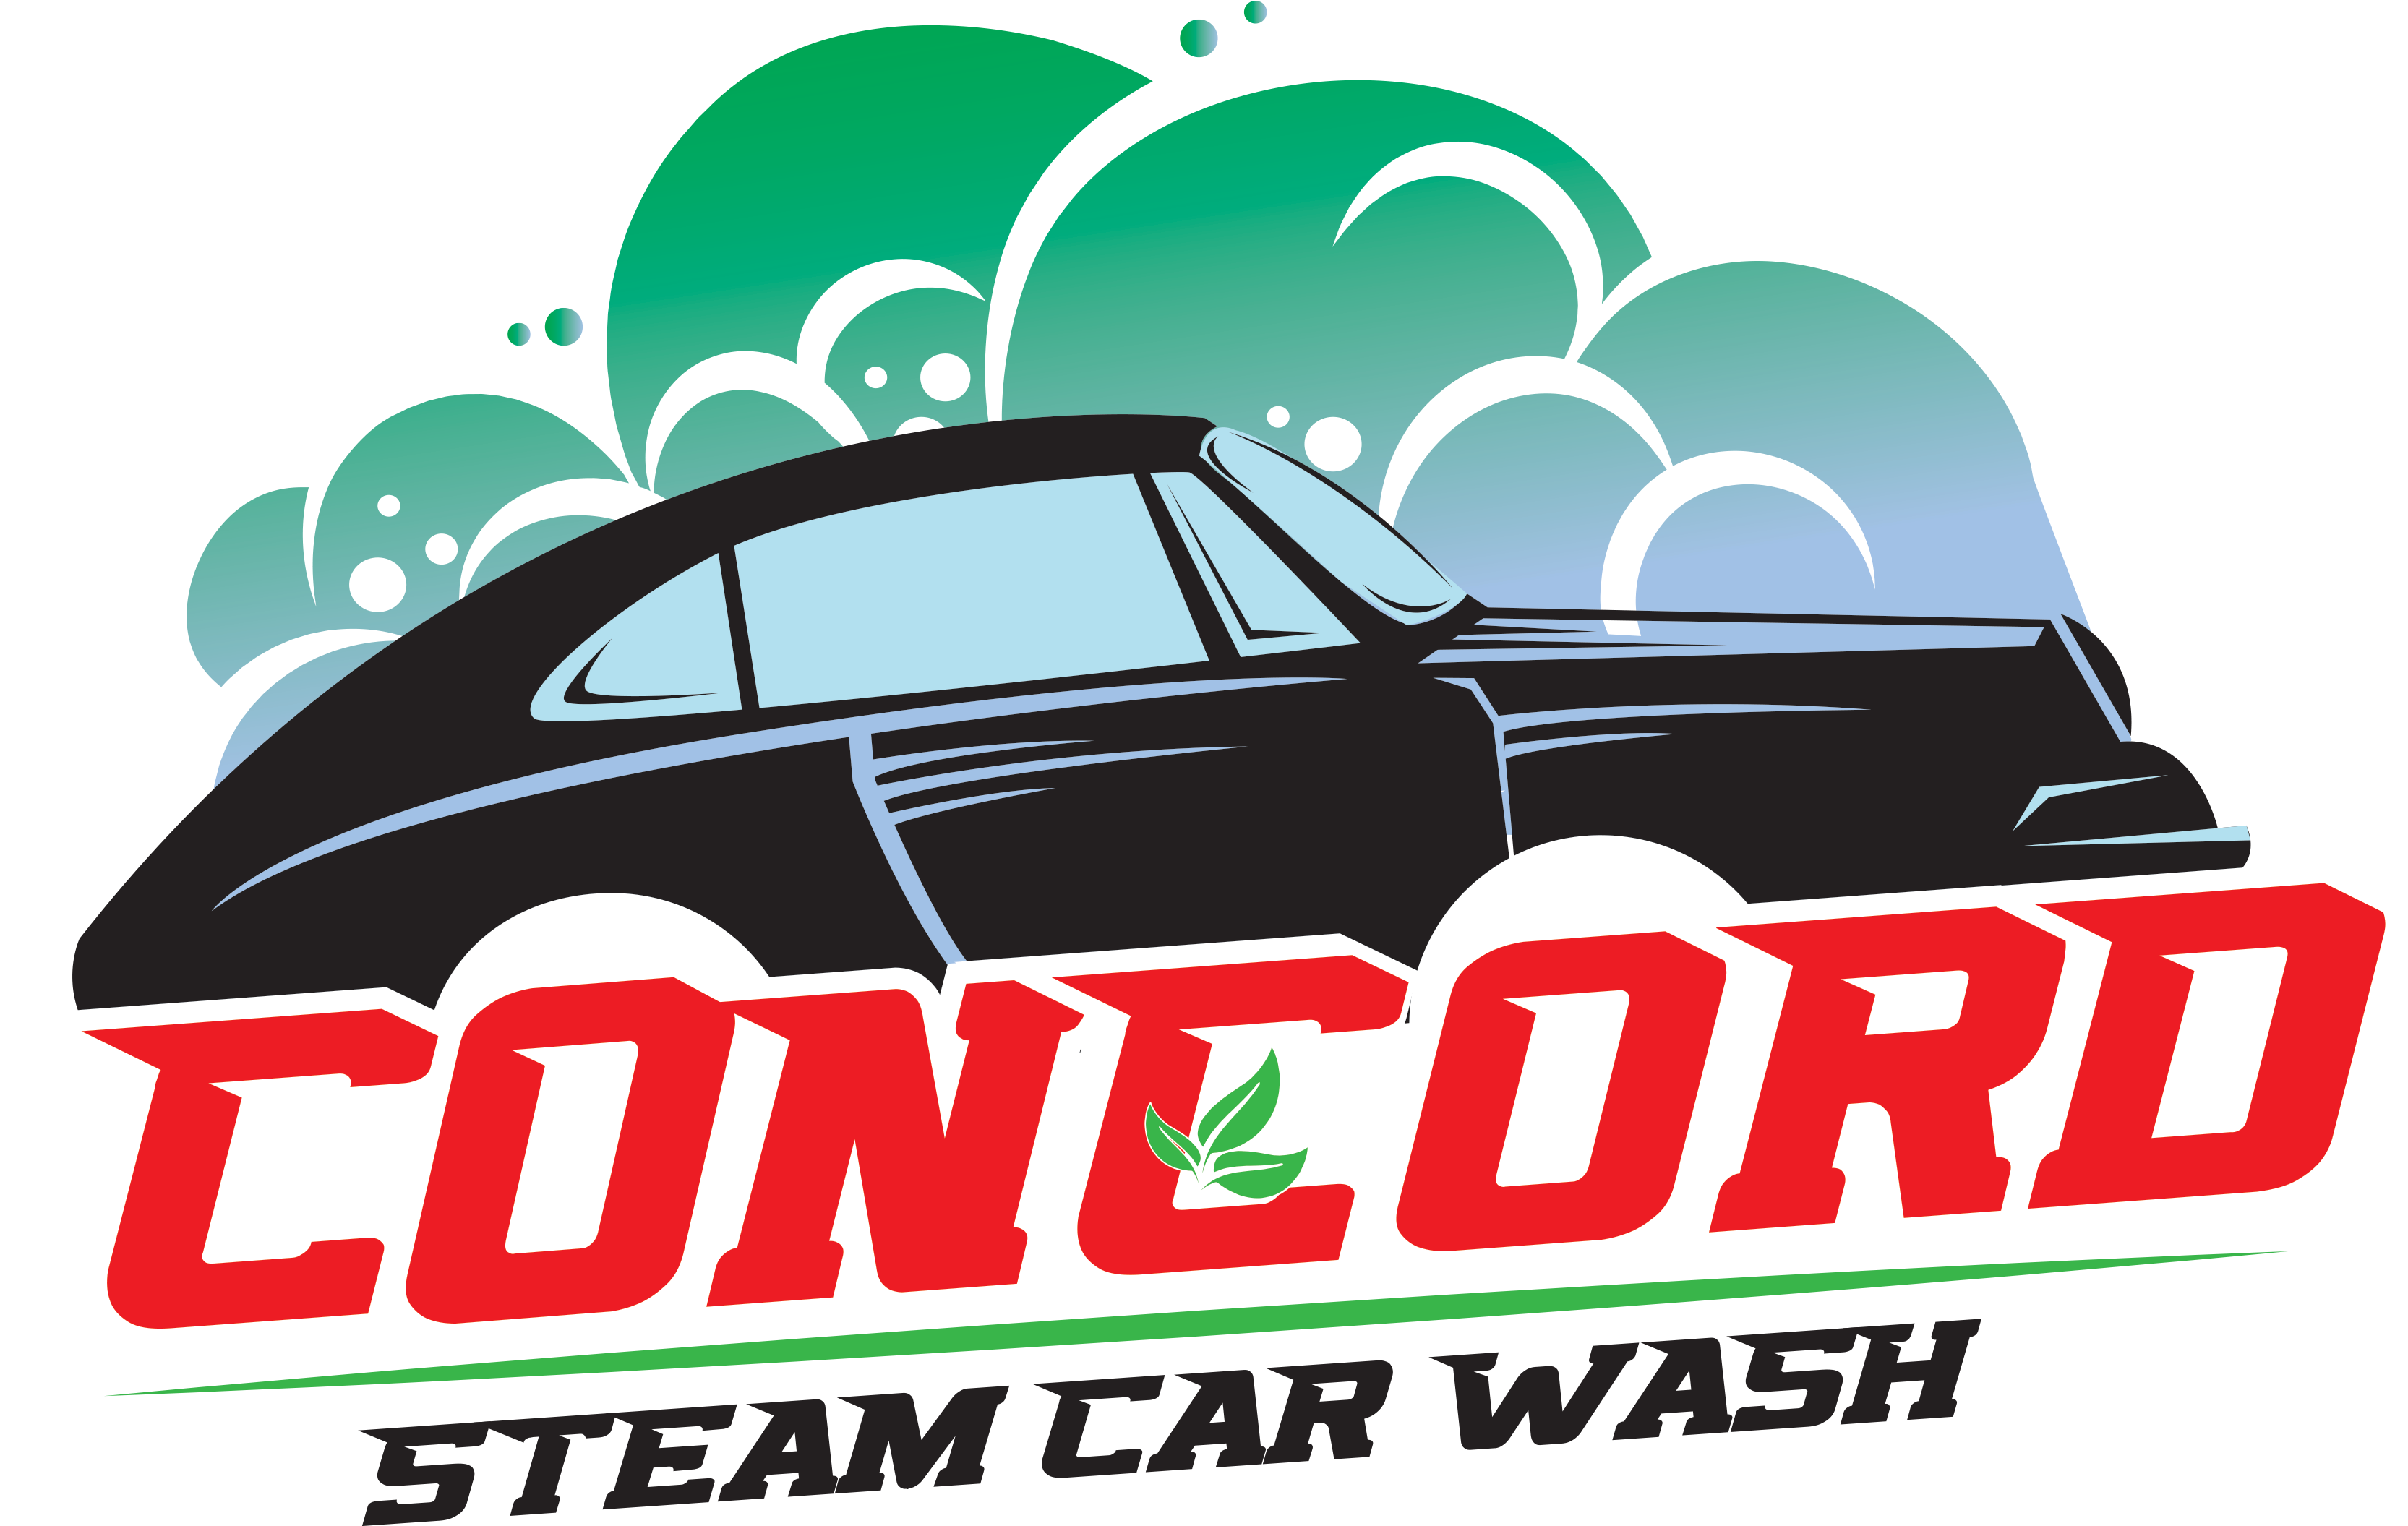 Concord Steam Car Wash Logo PNG